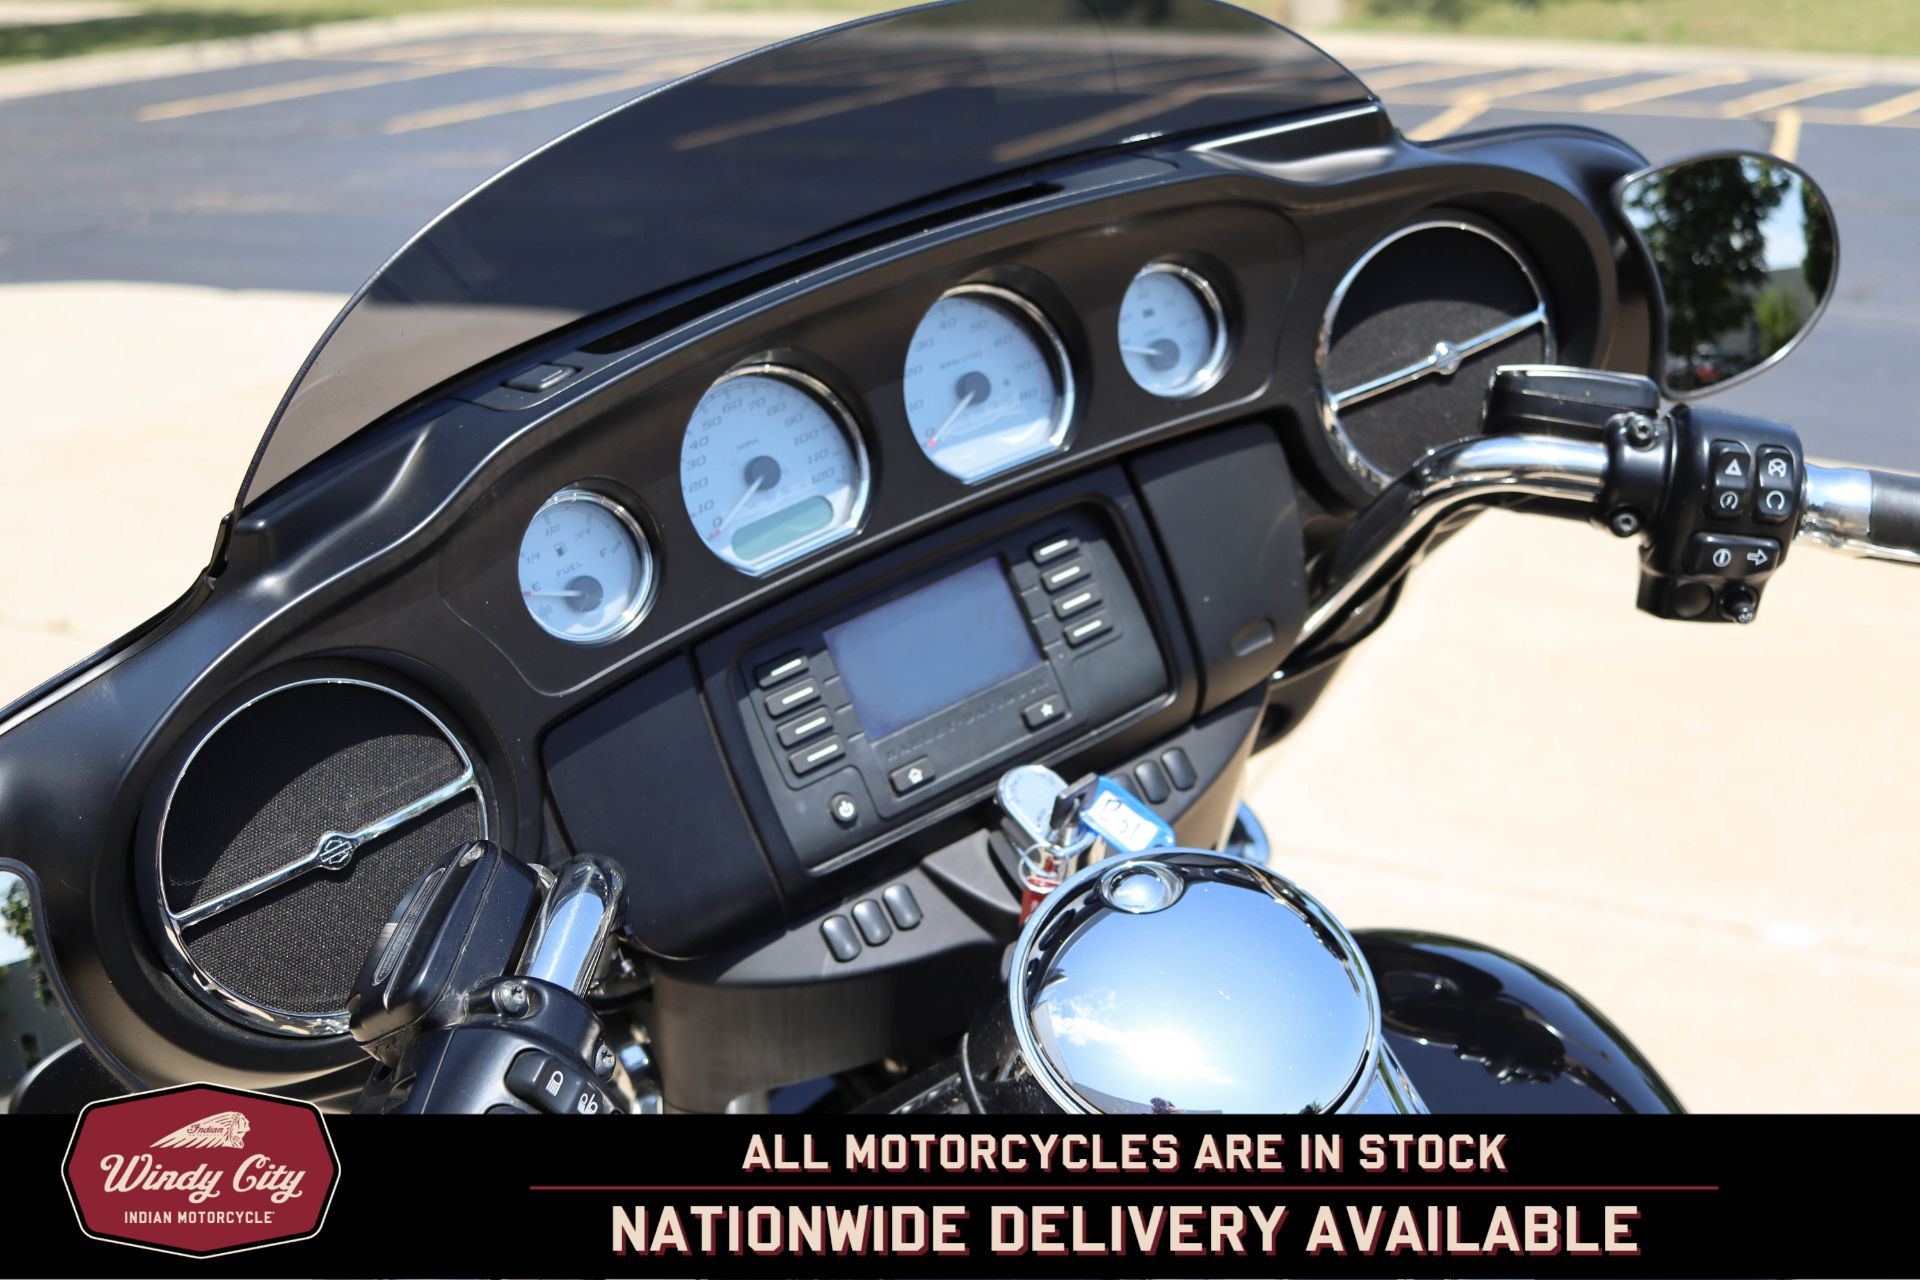 2014 Harley-Davidson Street Glide® in Lake Villa, Illinois - Photo 14